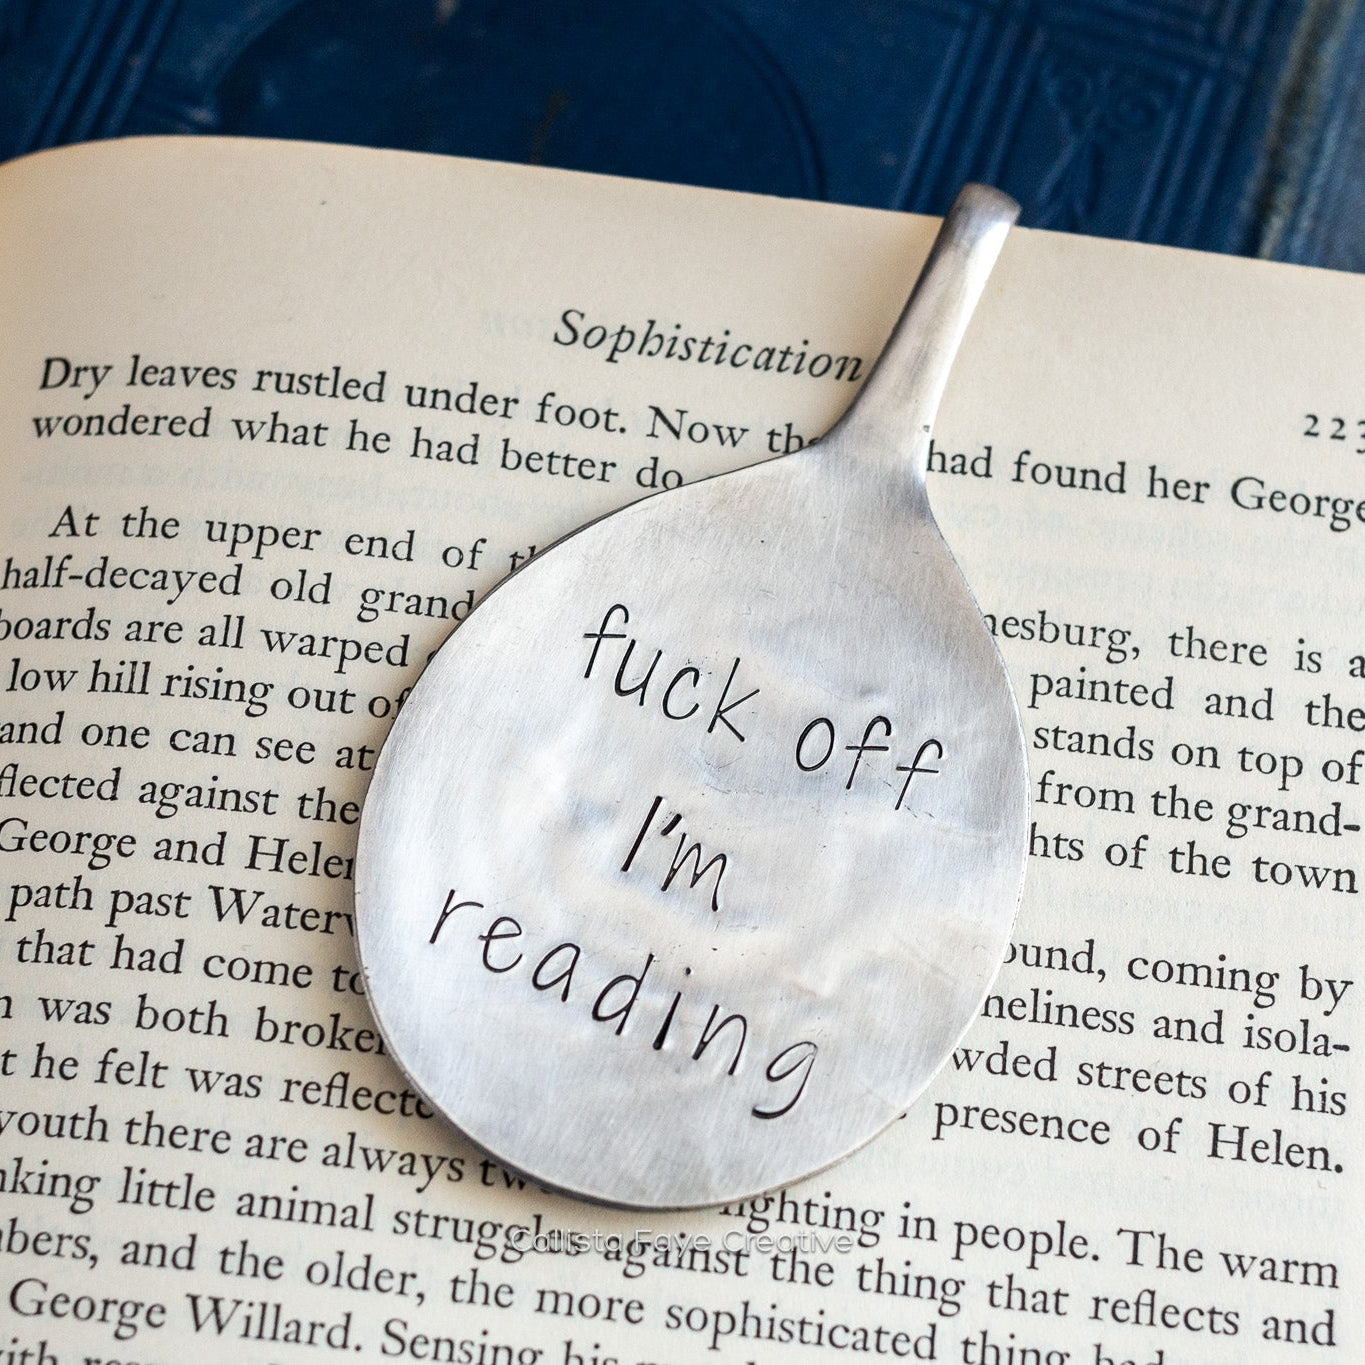 Fuck Off I'm Reading, Vintage Spoon Bookmark Bookmarks callistafaye   